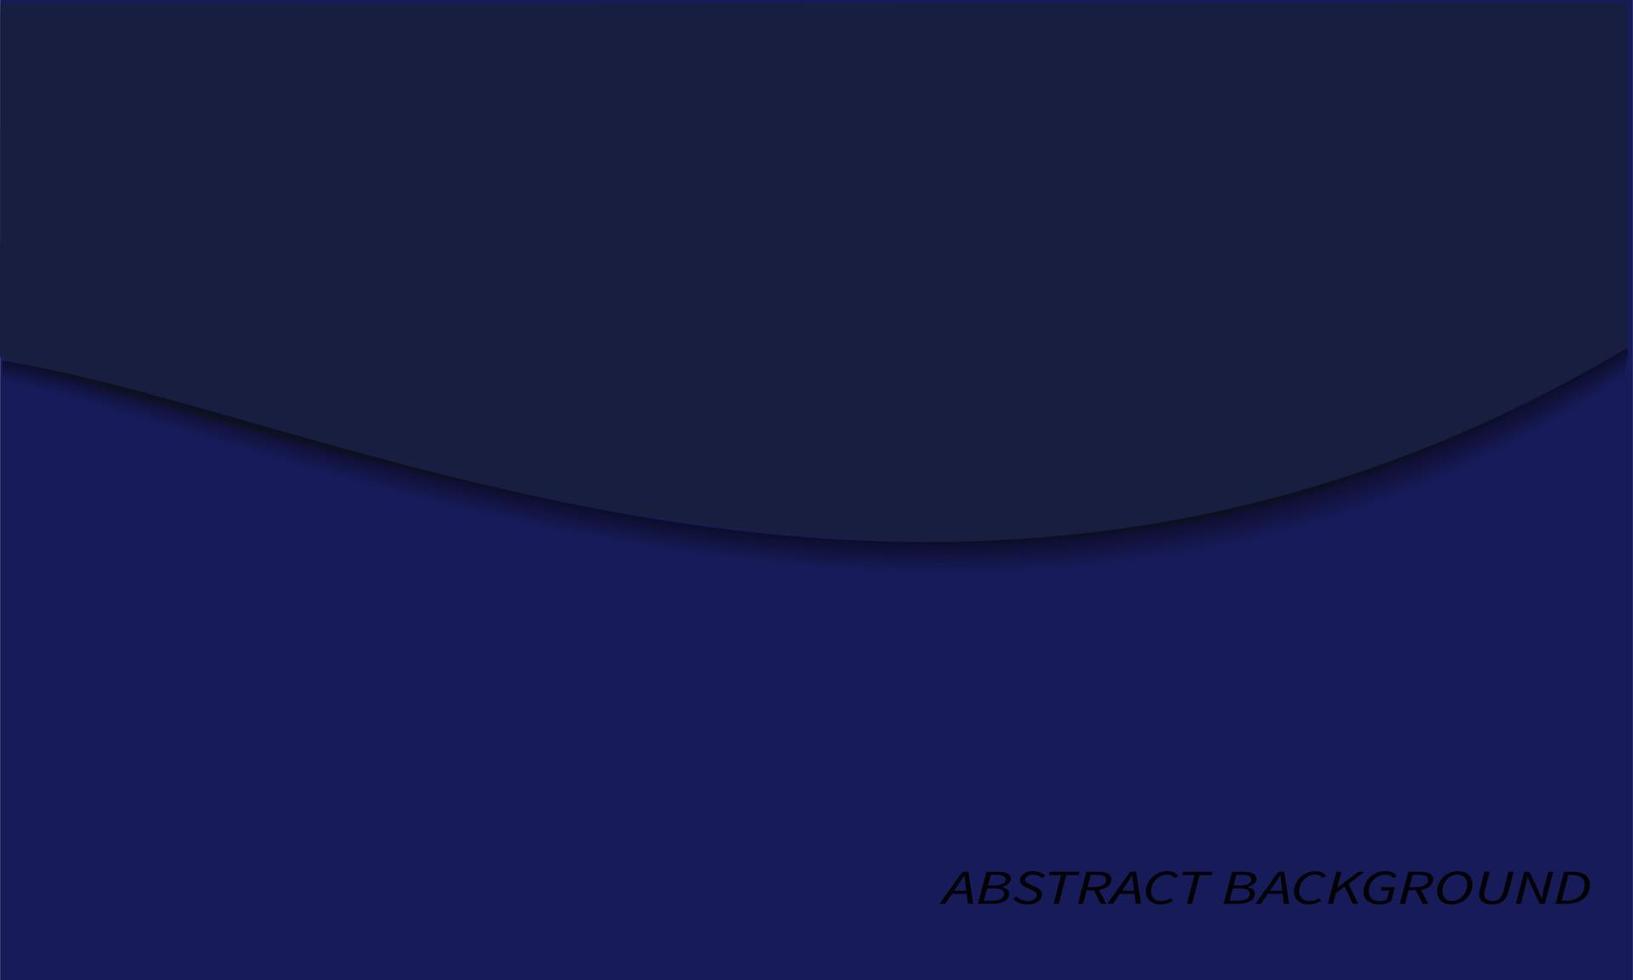 fundo azul escuro com linhas de sombra abstratas para capa, pôster, banner, outdoor vetor